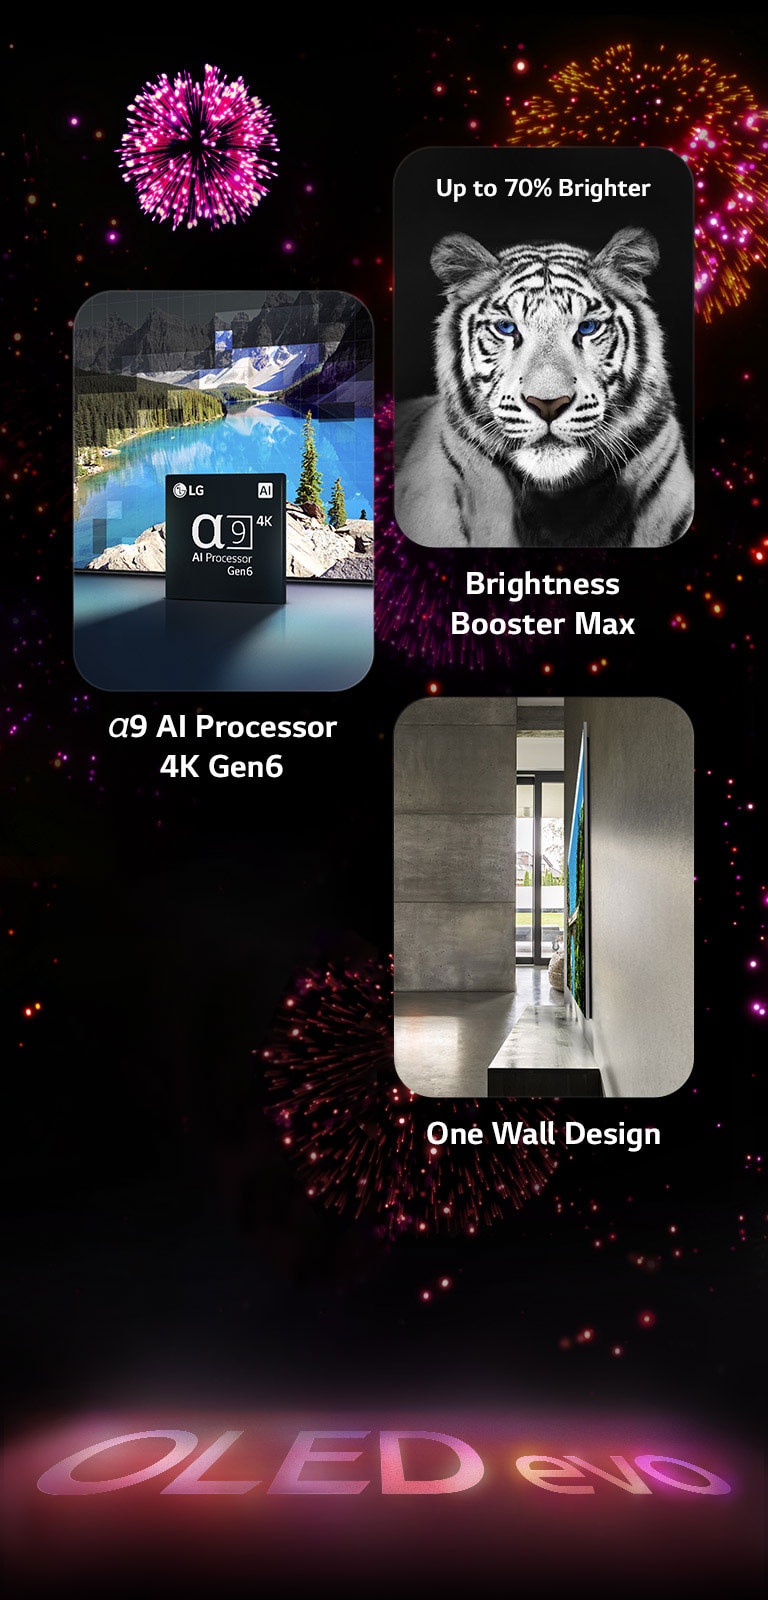 LG OLED55G3 55 pulgadas OLED evo G3 4K Smart TV Manual de usuario